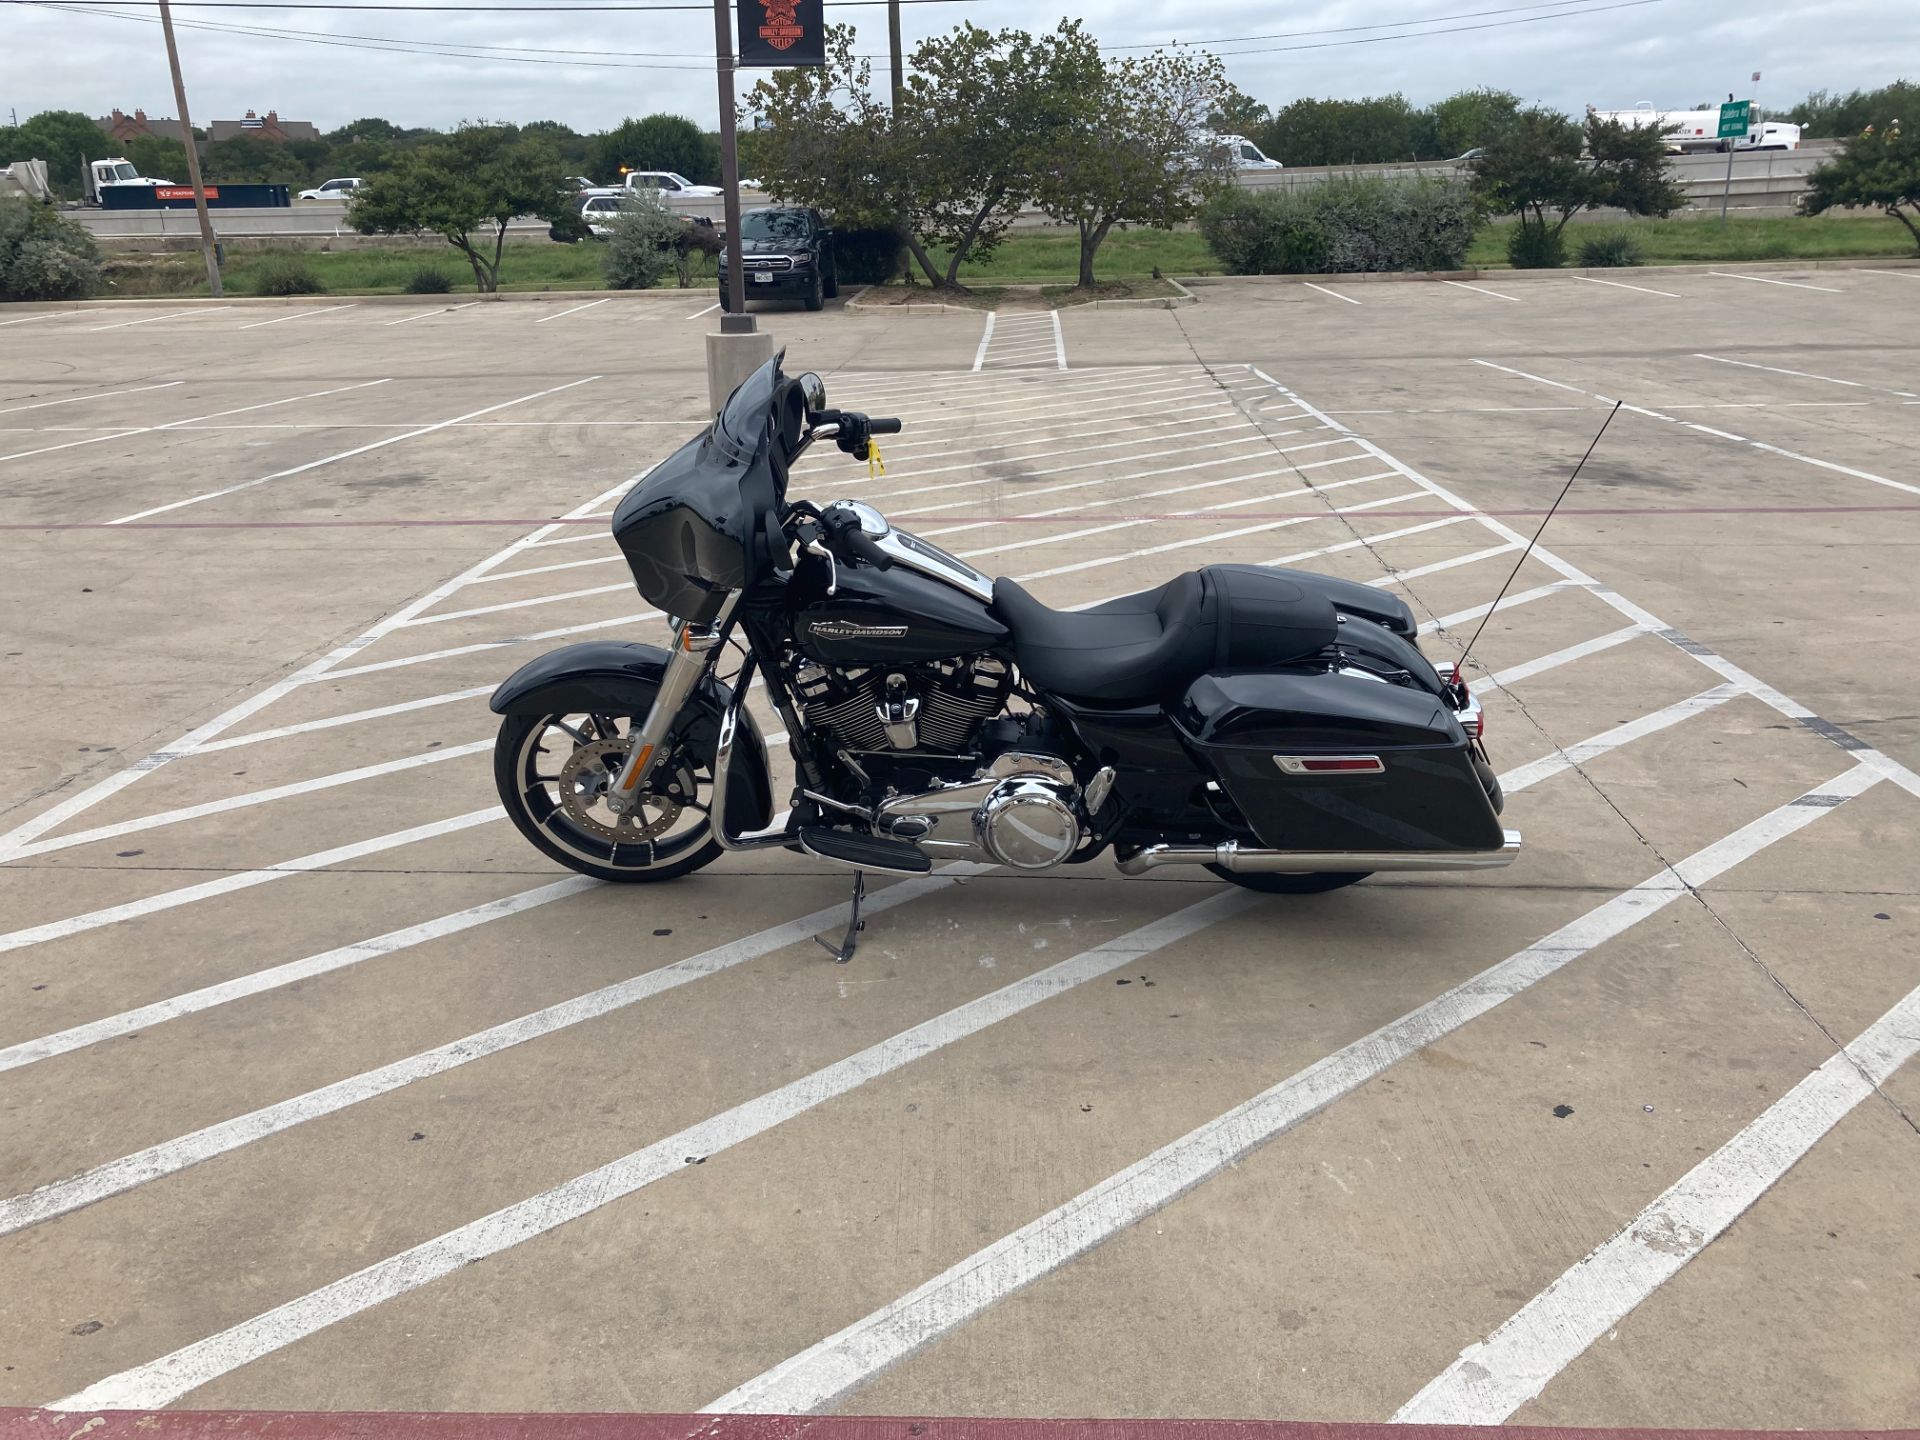 2021 Harley-Davidson Street Glide® in San Antonio, Texas - Photo 5